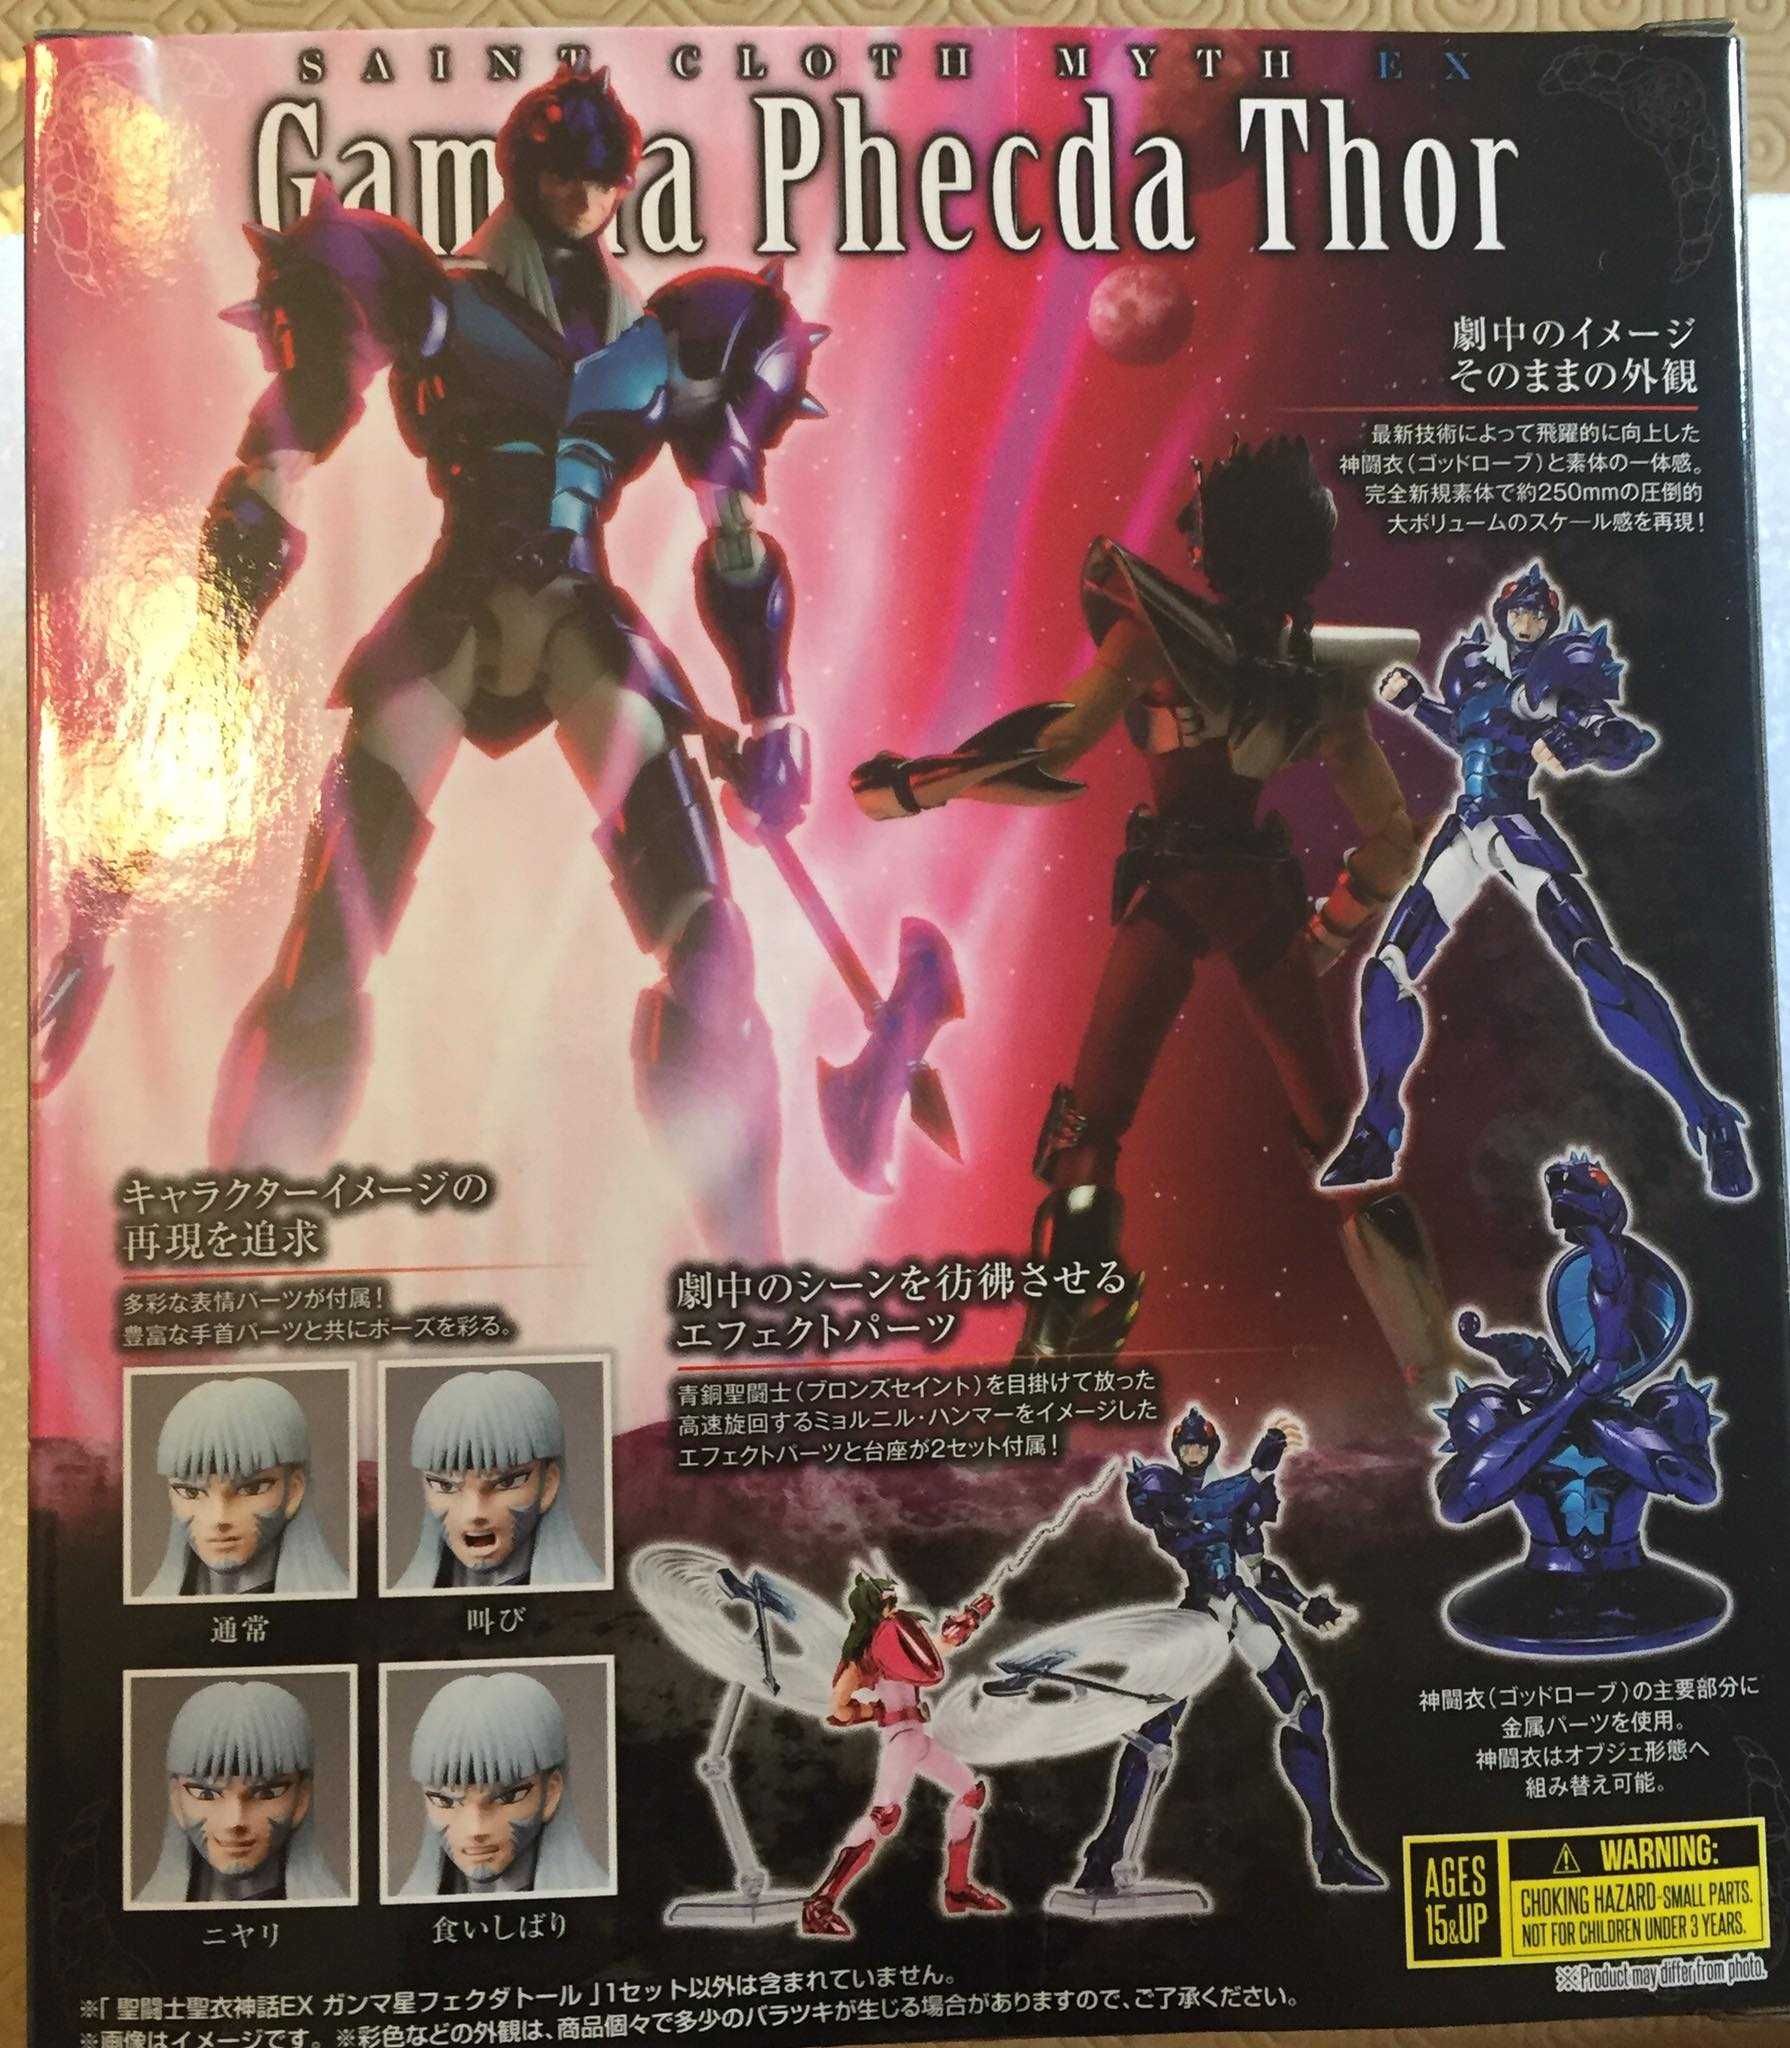 Thor Phecda Gamma Cloth Myth Ex Saint Seiya Bandai